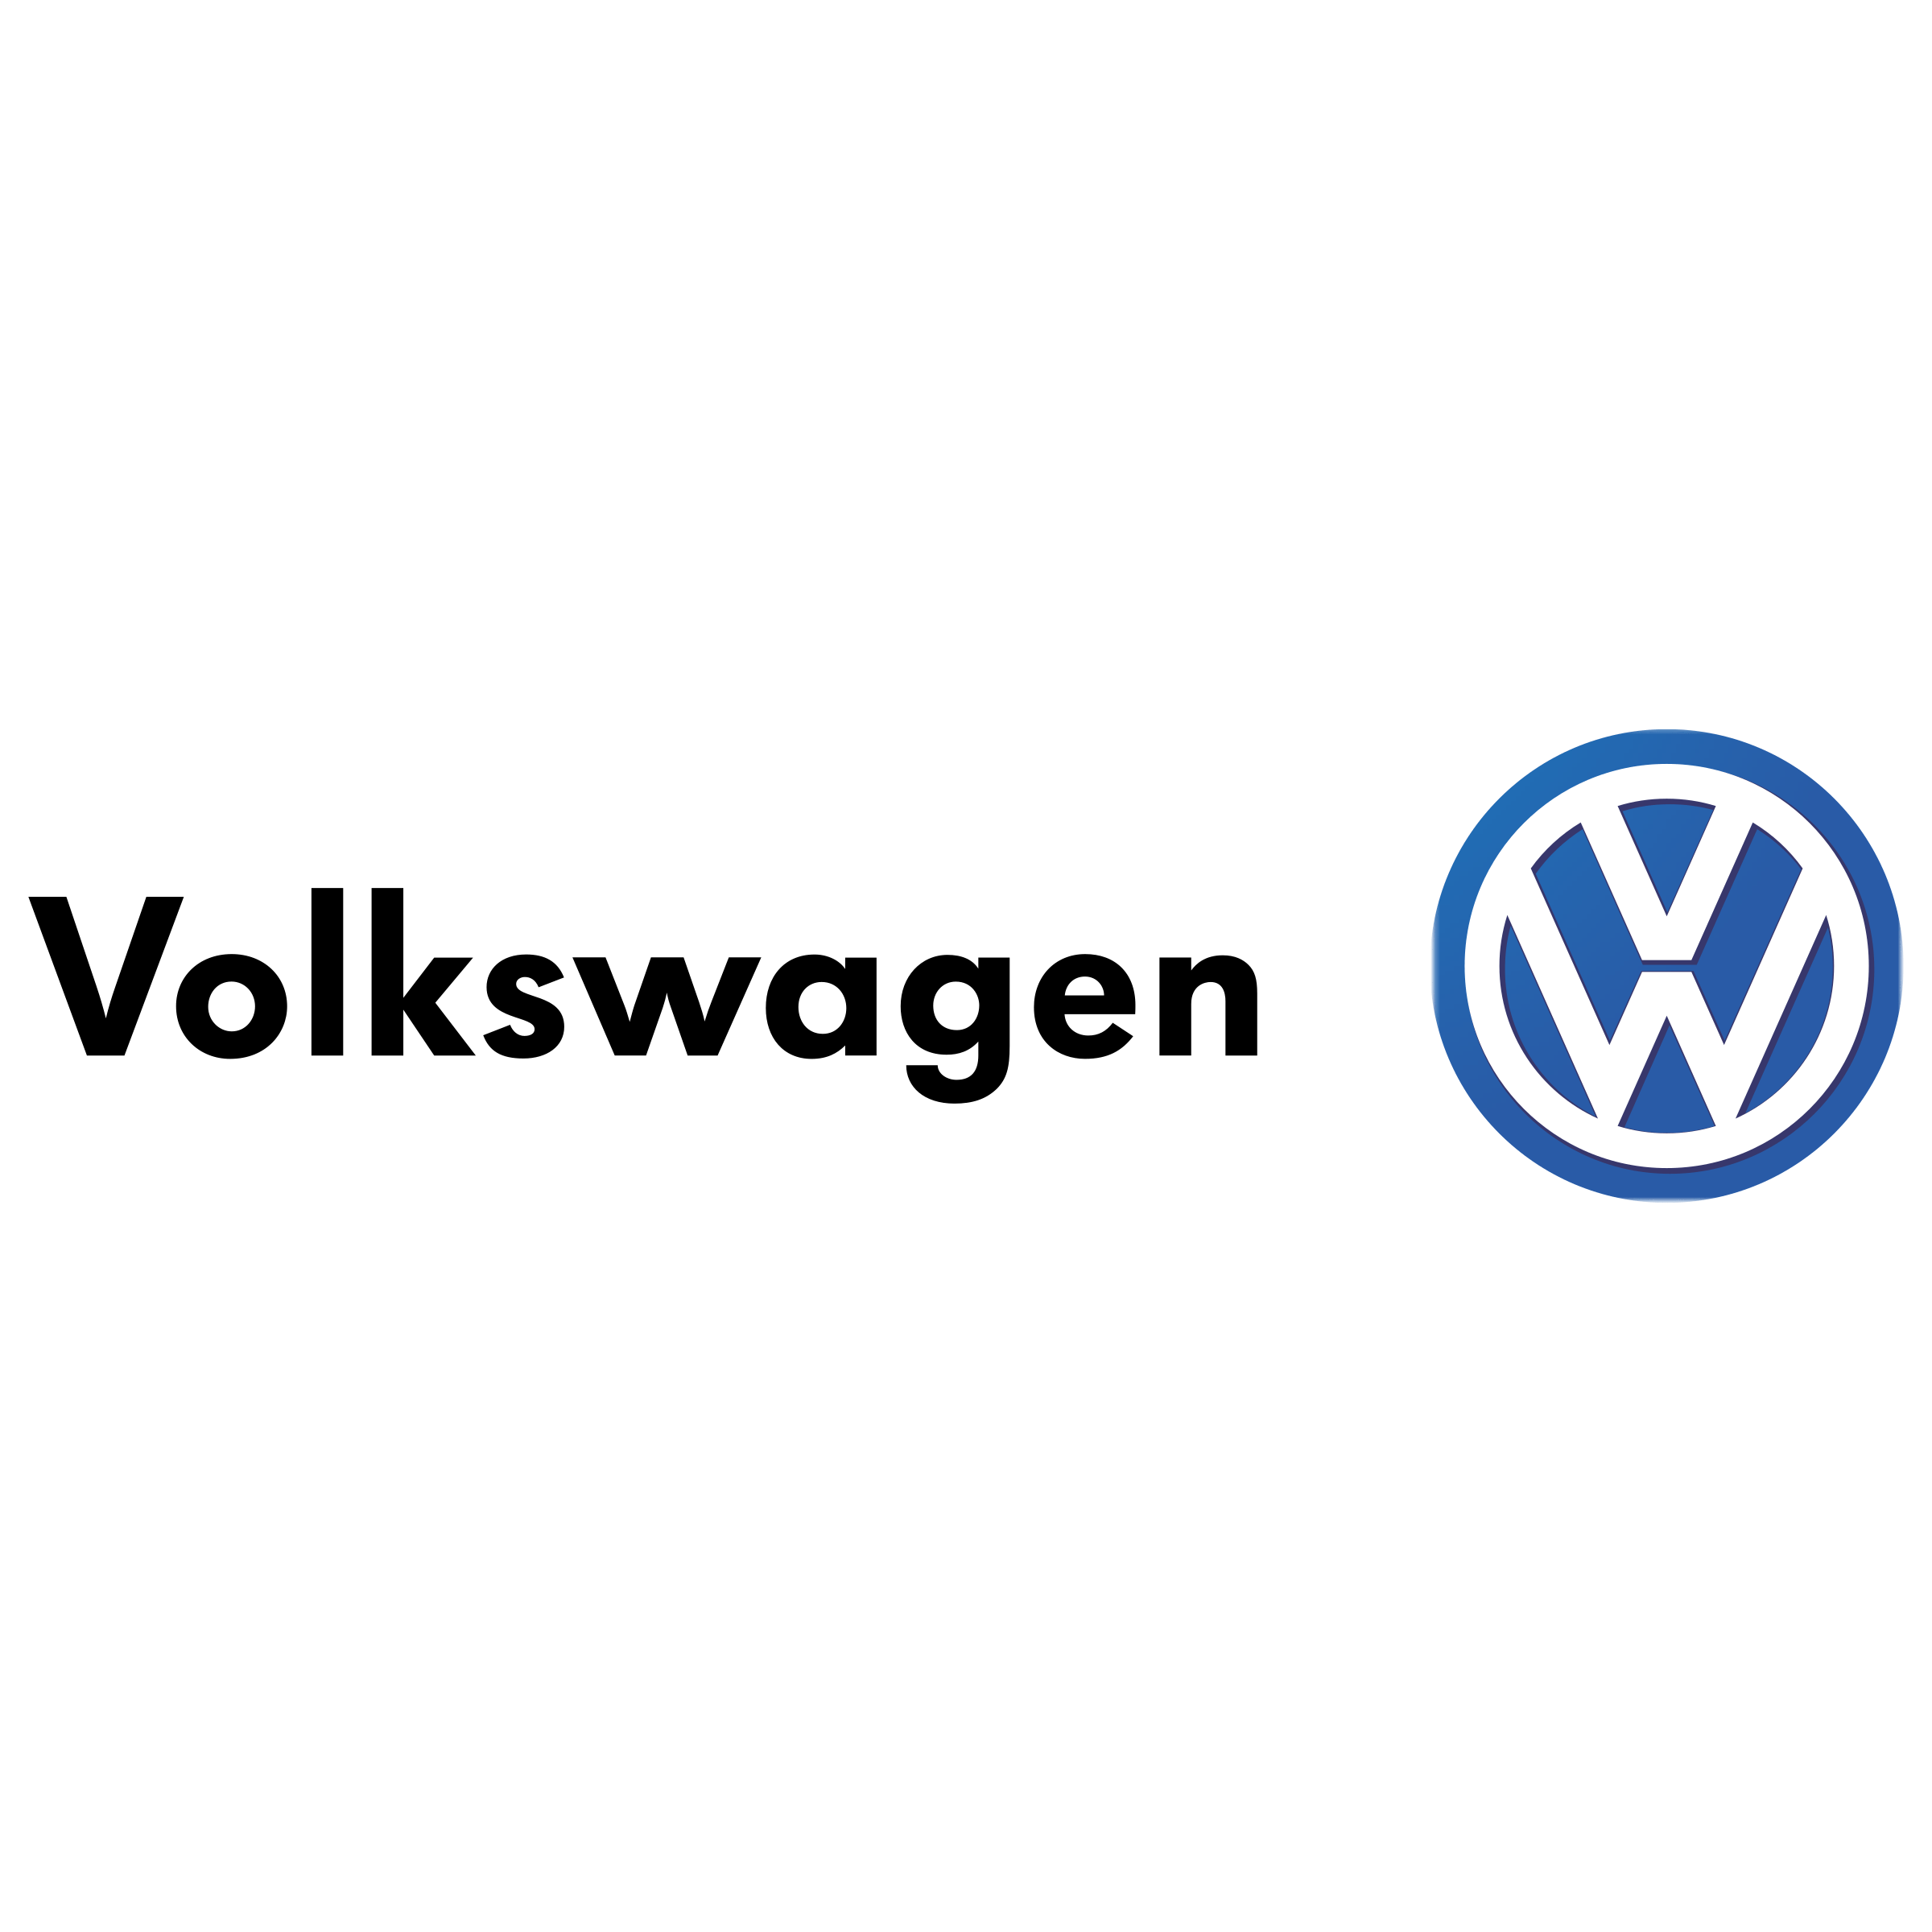 Volkswagen Logo - Volkswagen Logo PNG Transparent & SVG Vector - Freebie Supply